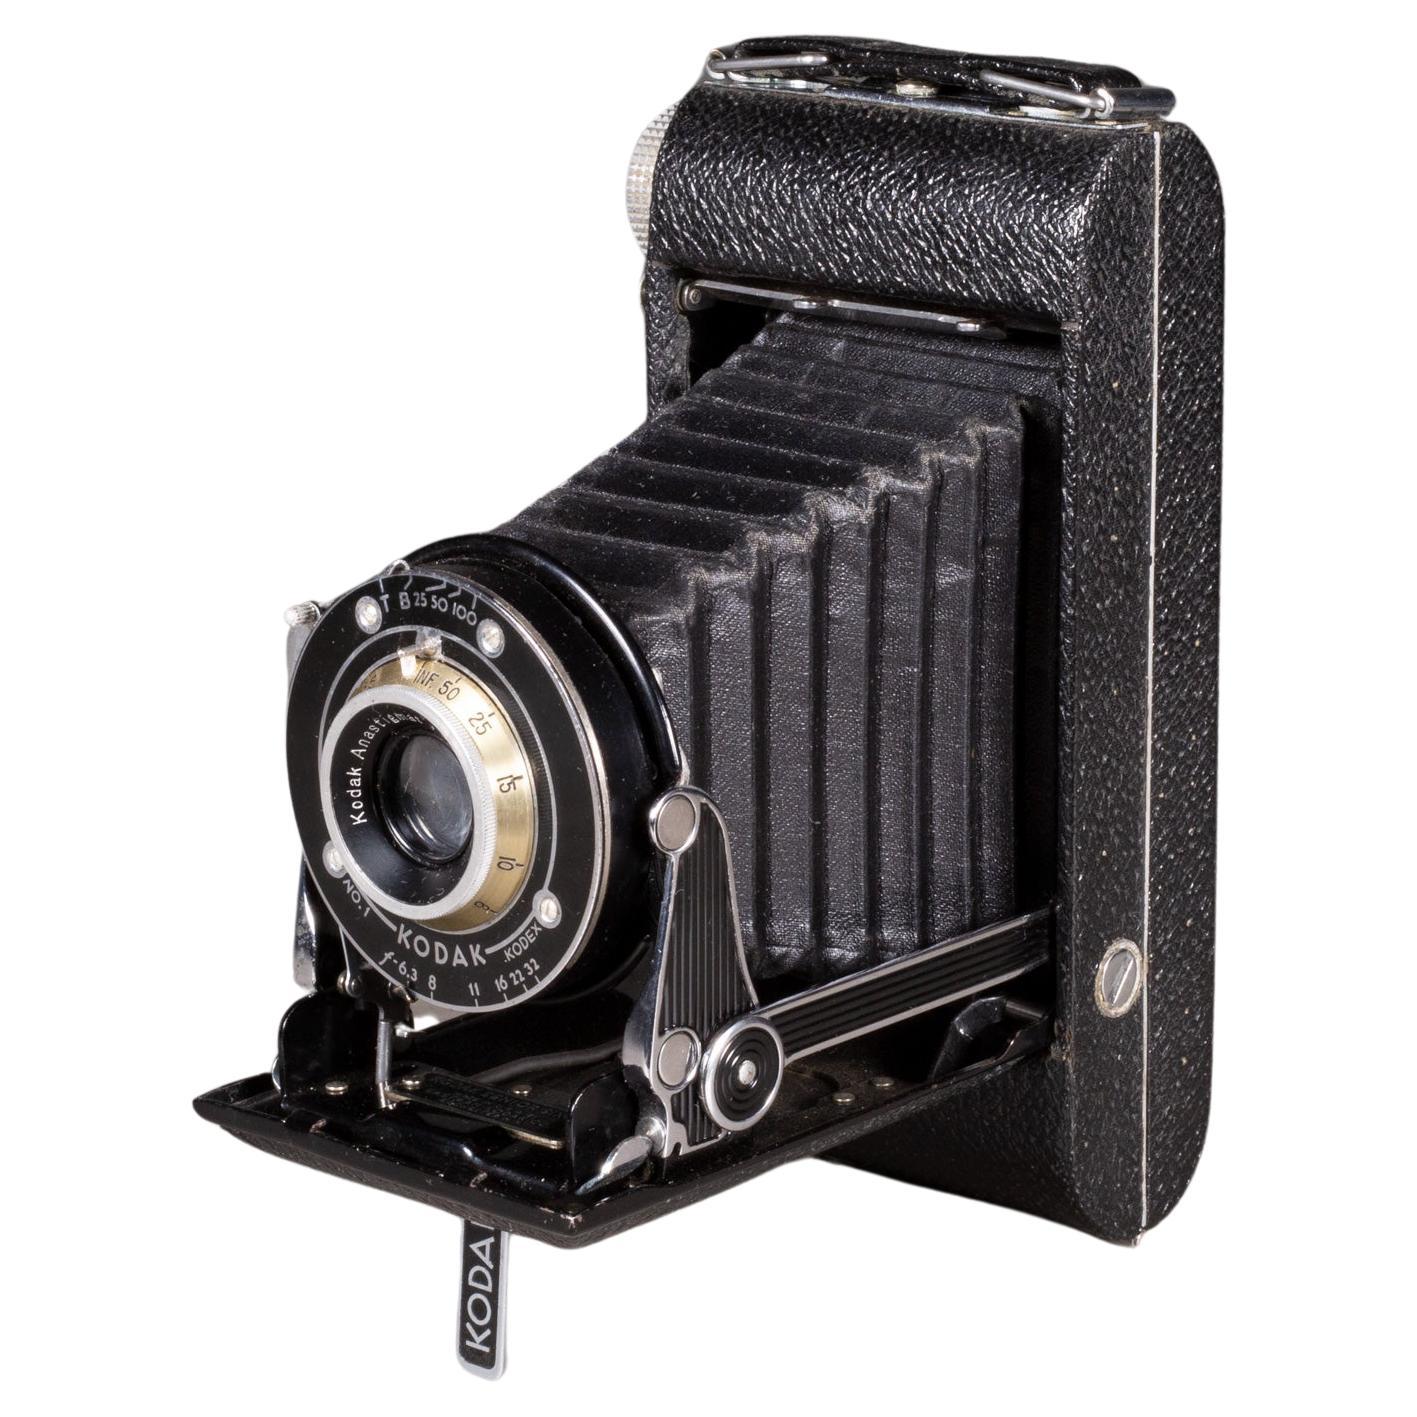 Eastman Kodak ancien appareil photo de poche « N° 1 Kodak » pliant c.1909-1920